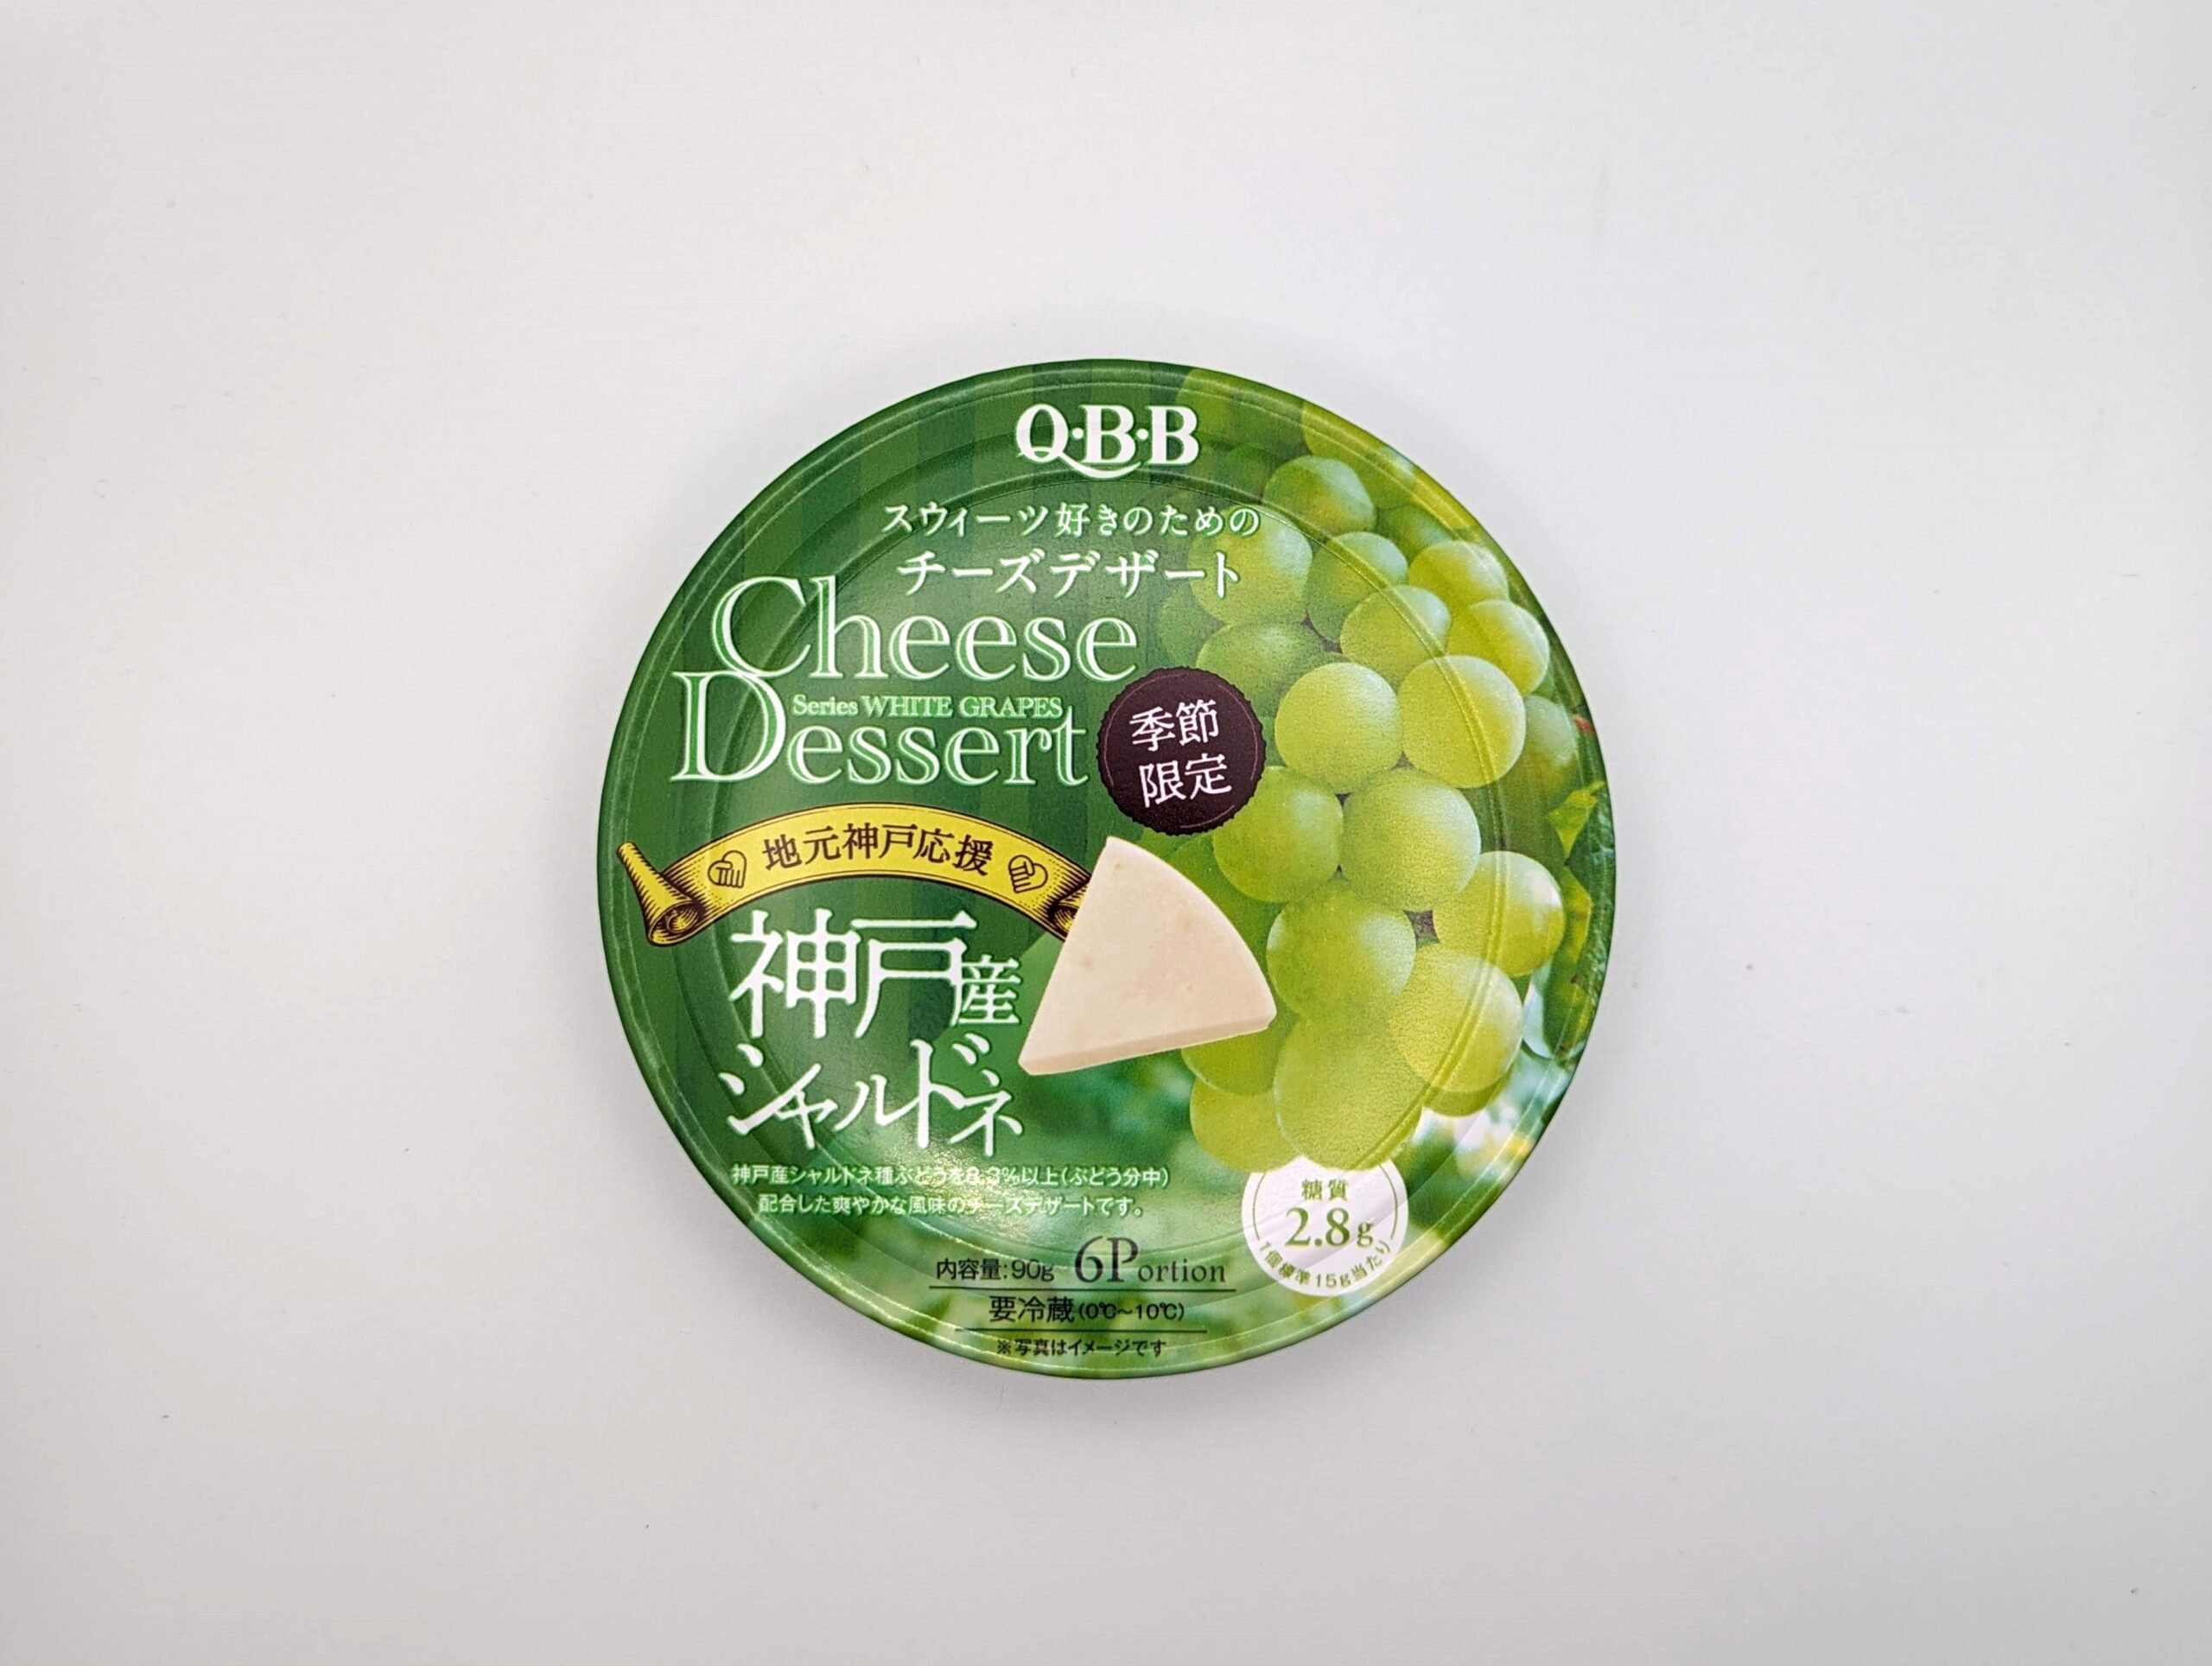 QBB(六甲バター）チーズデザート 神戸産シャルドネの写真 (1)